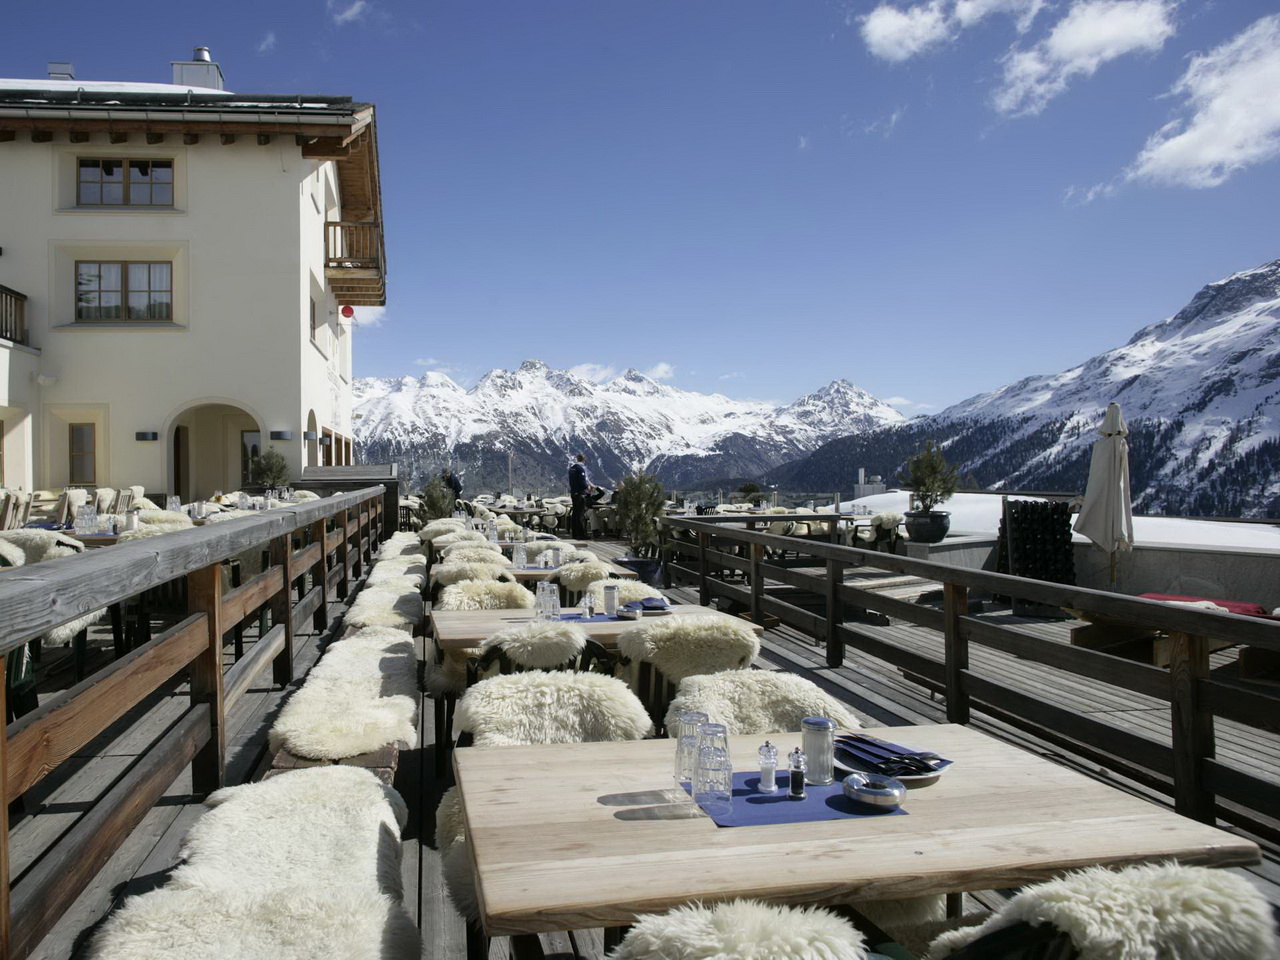 Kempinski Hotel St. Moritz